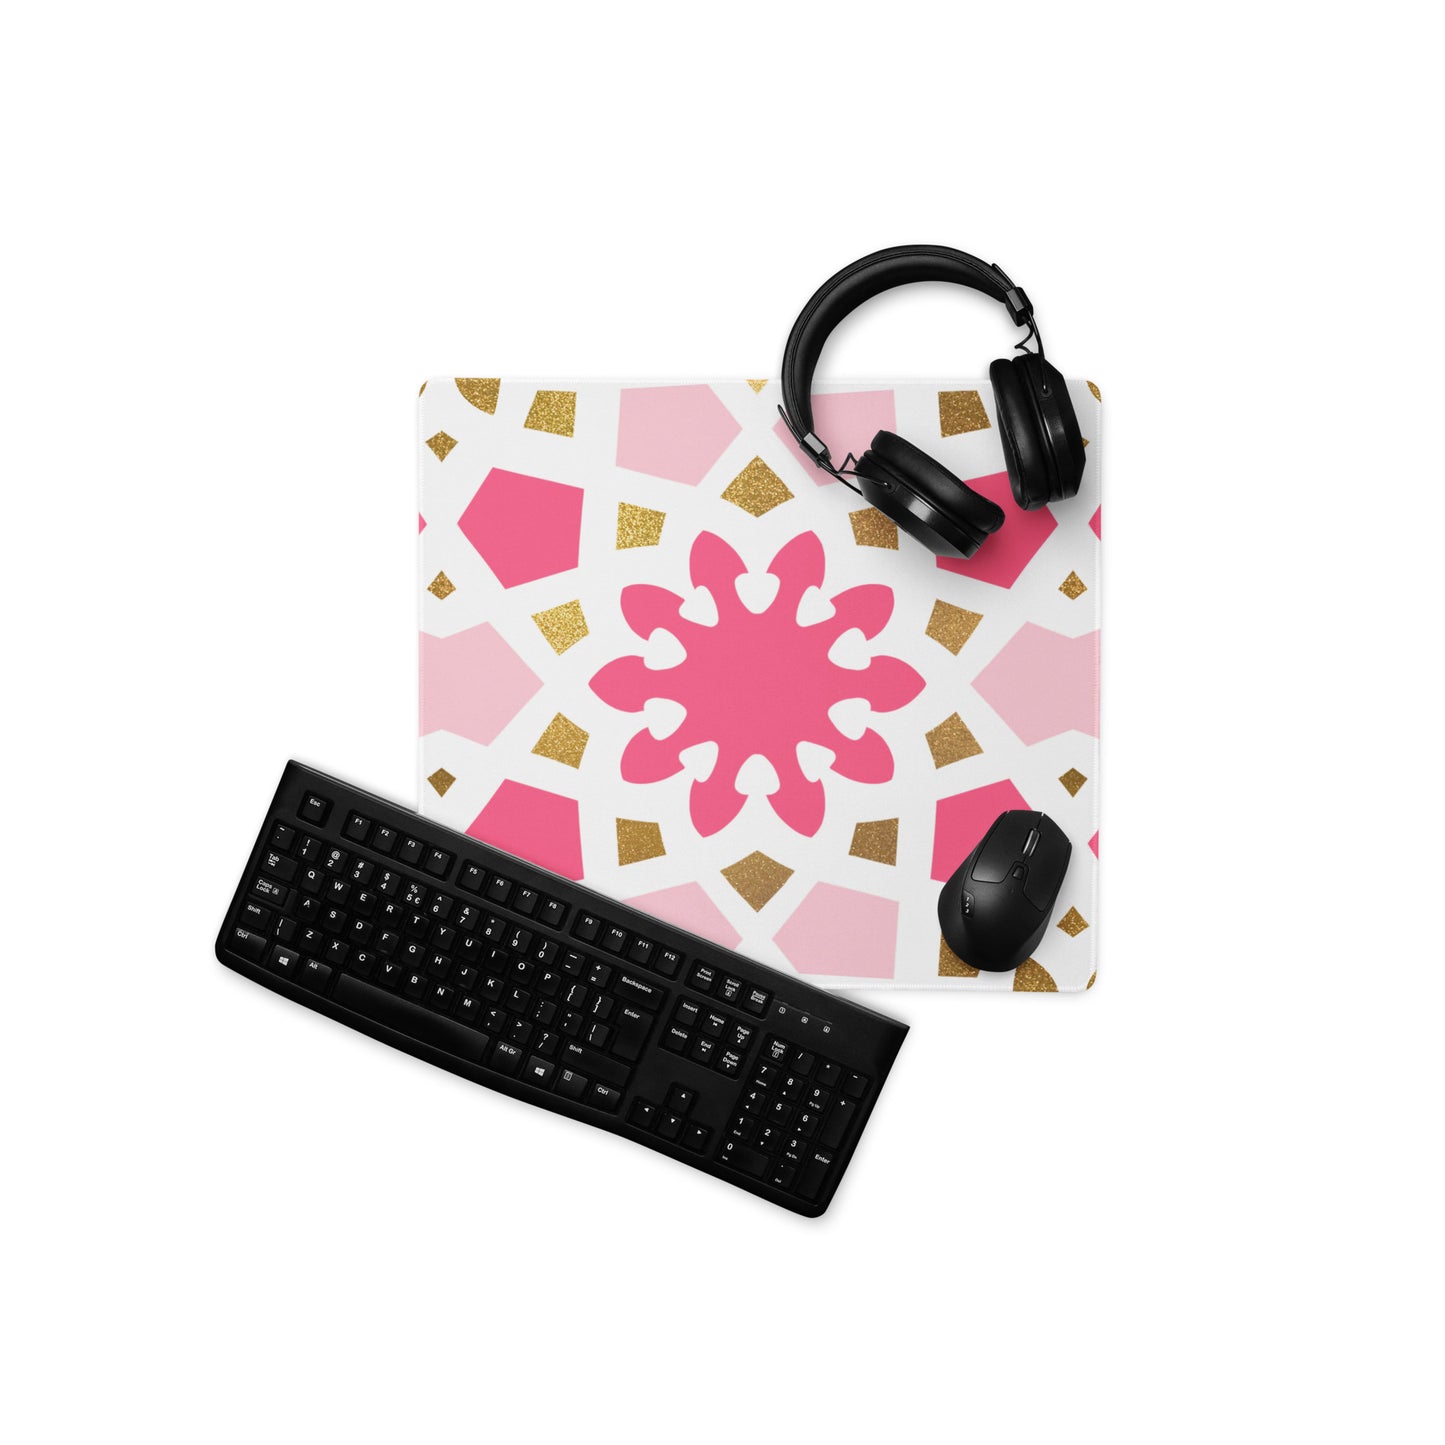 Desk Pad - Geometric Arabesque in Pinks